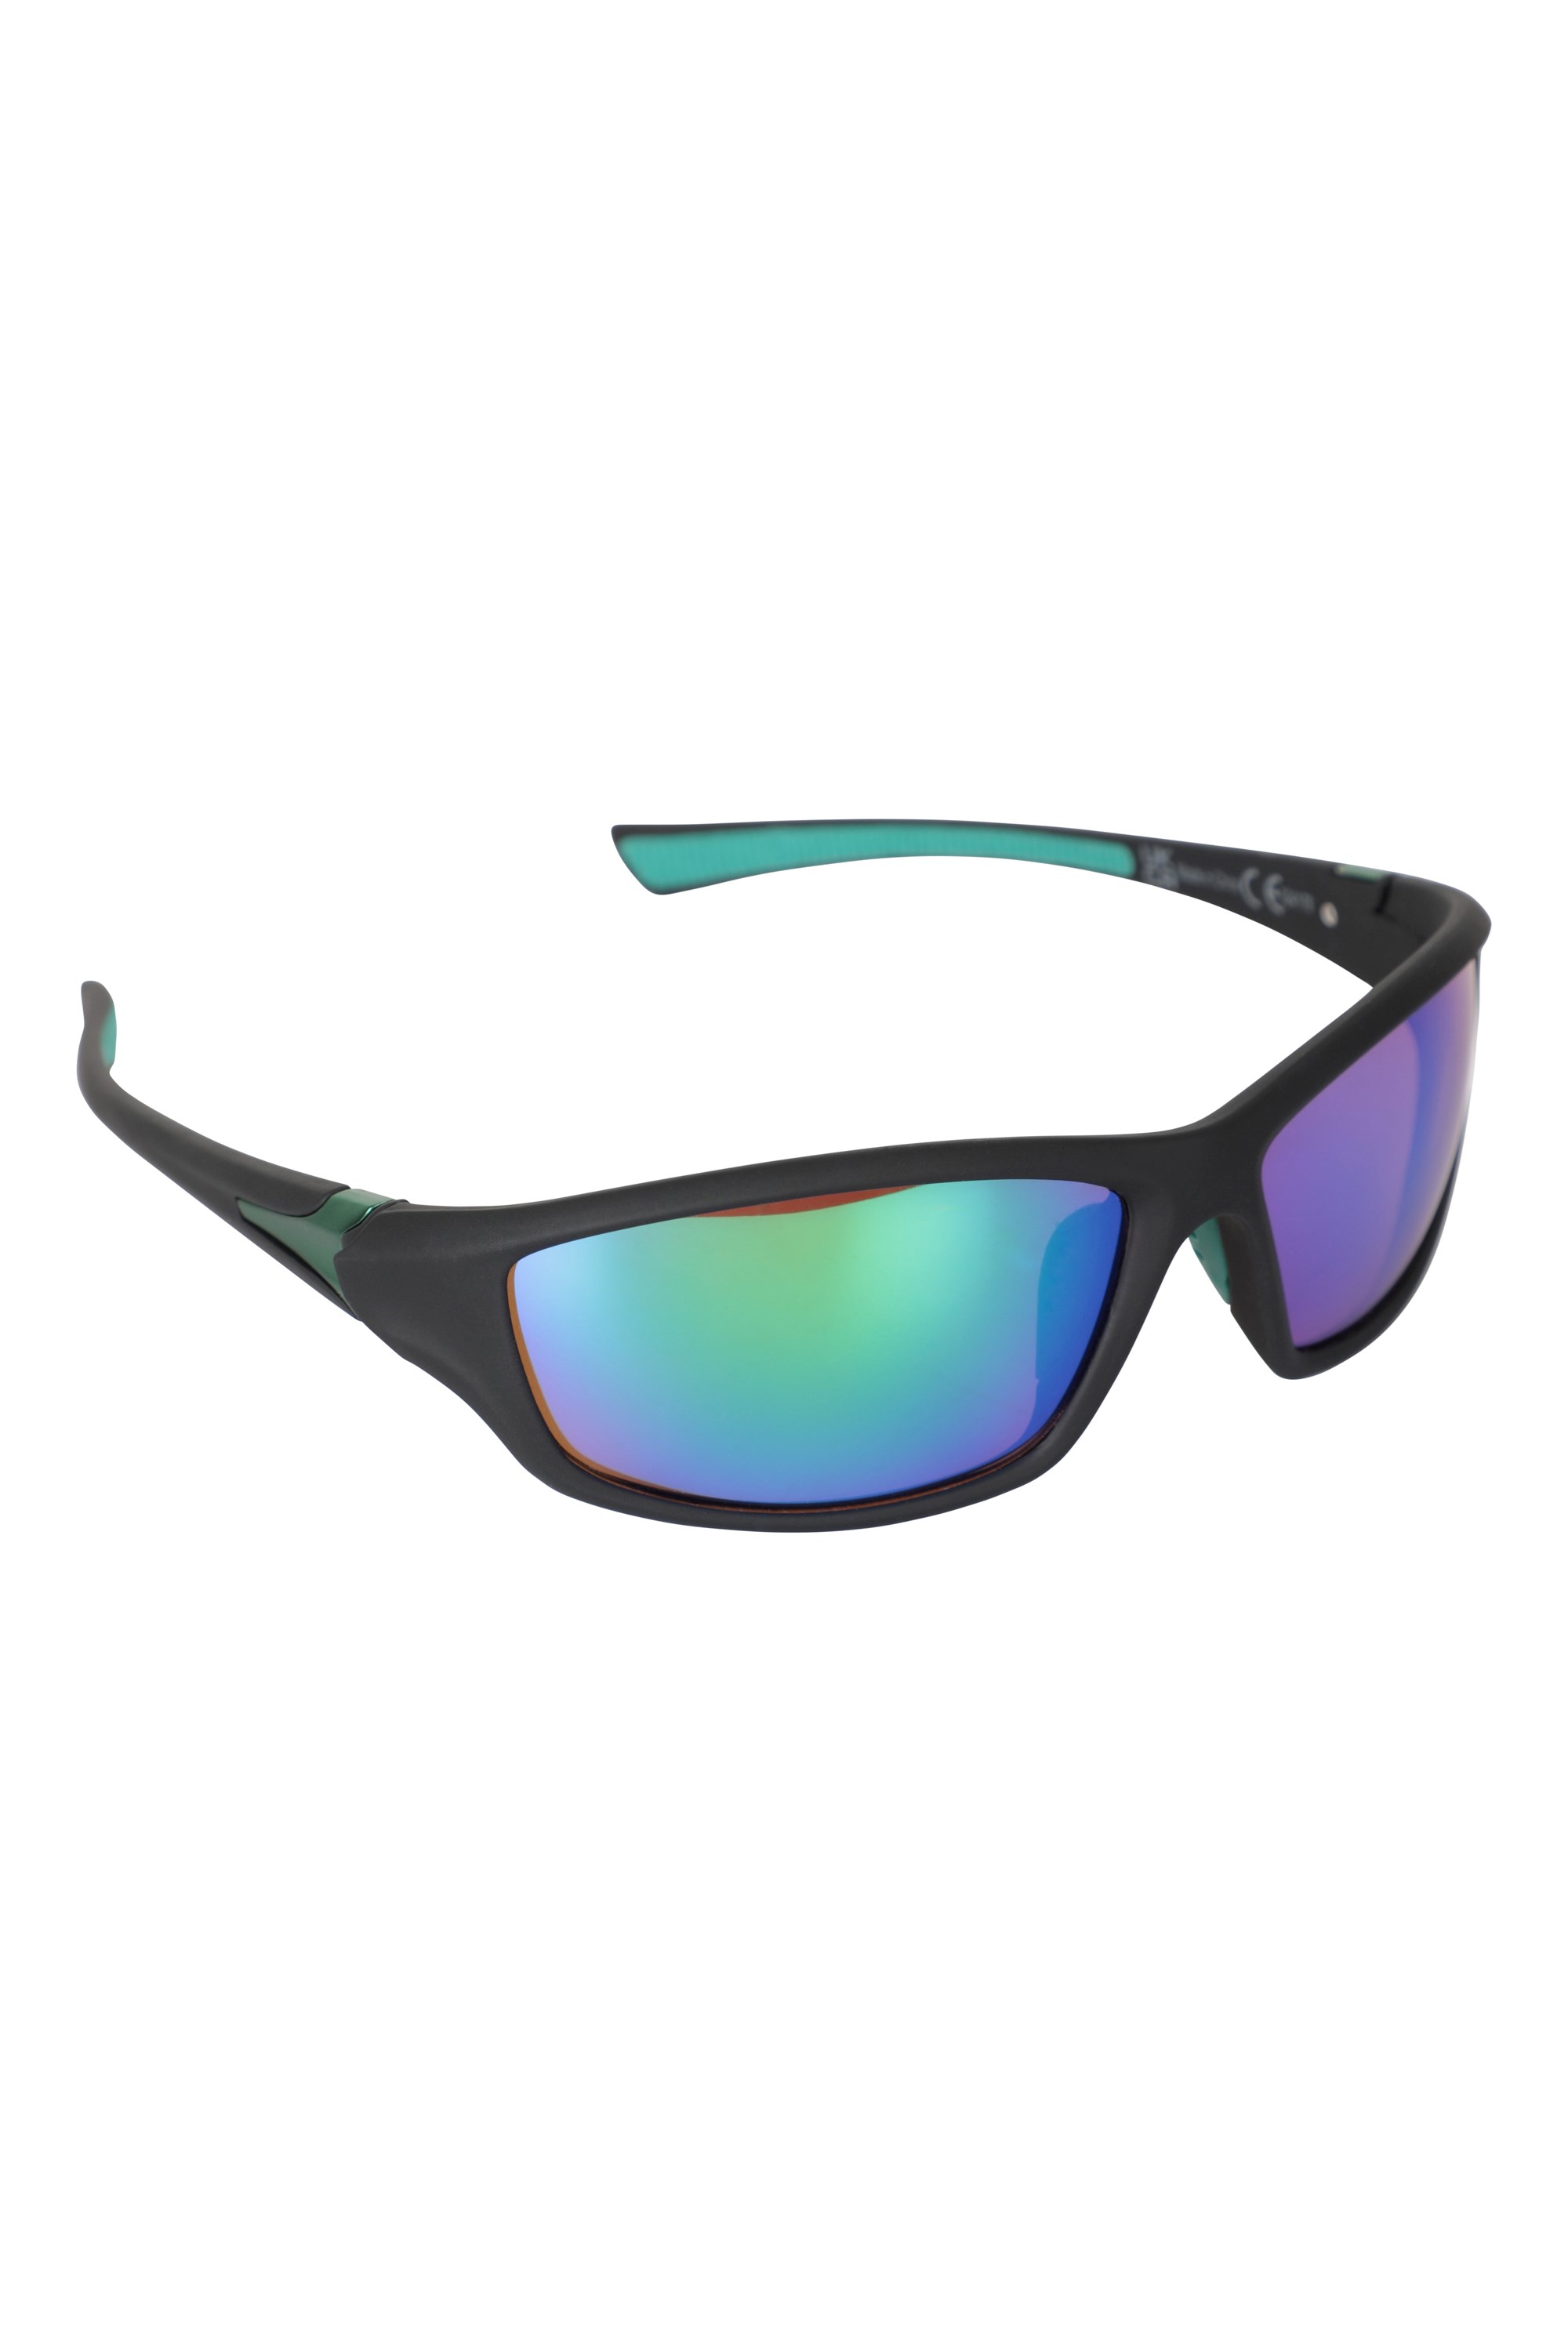 Mountain Warehouse Hayman Sunglasses - Black | Size ONE